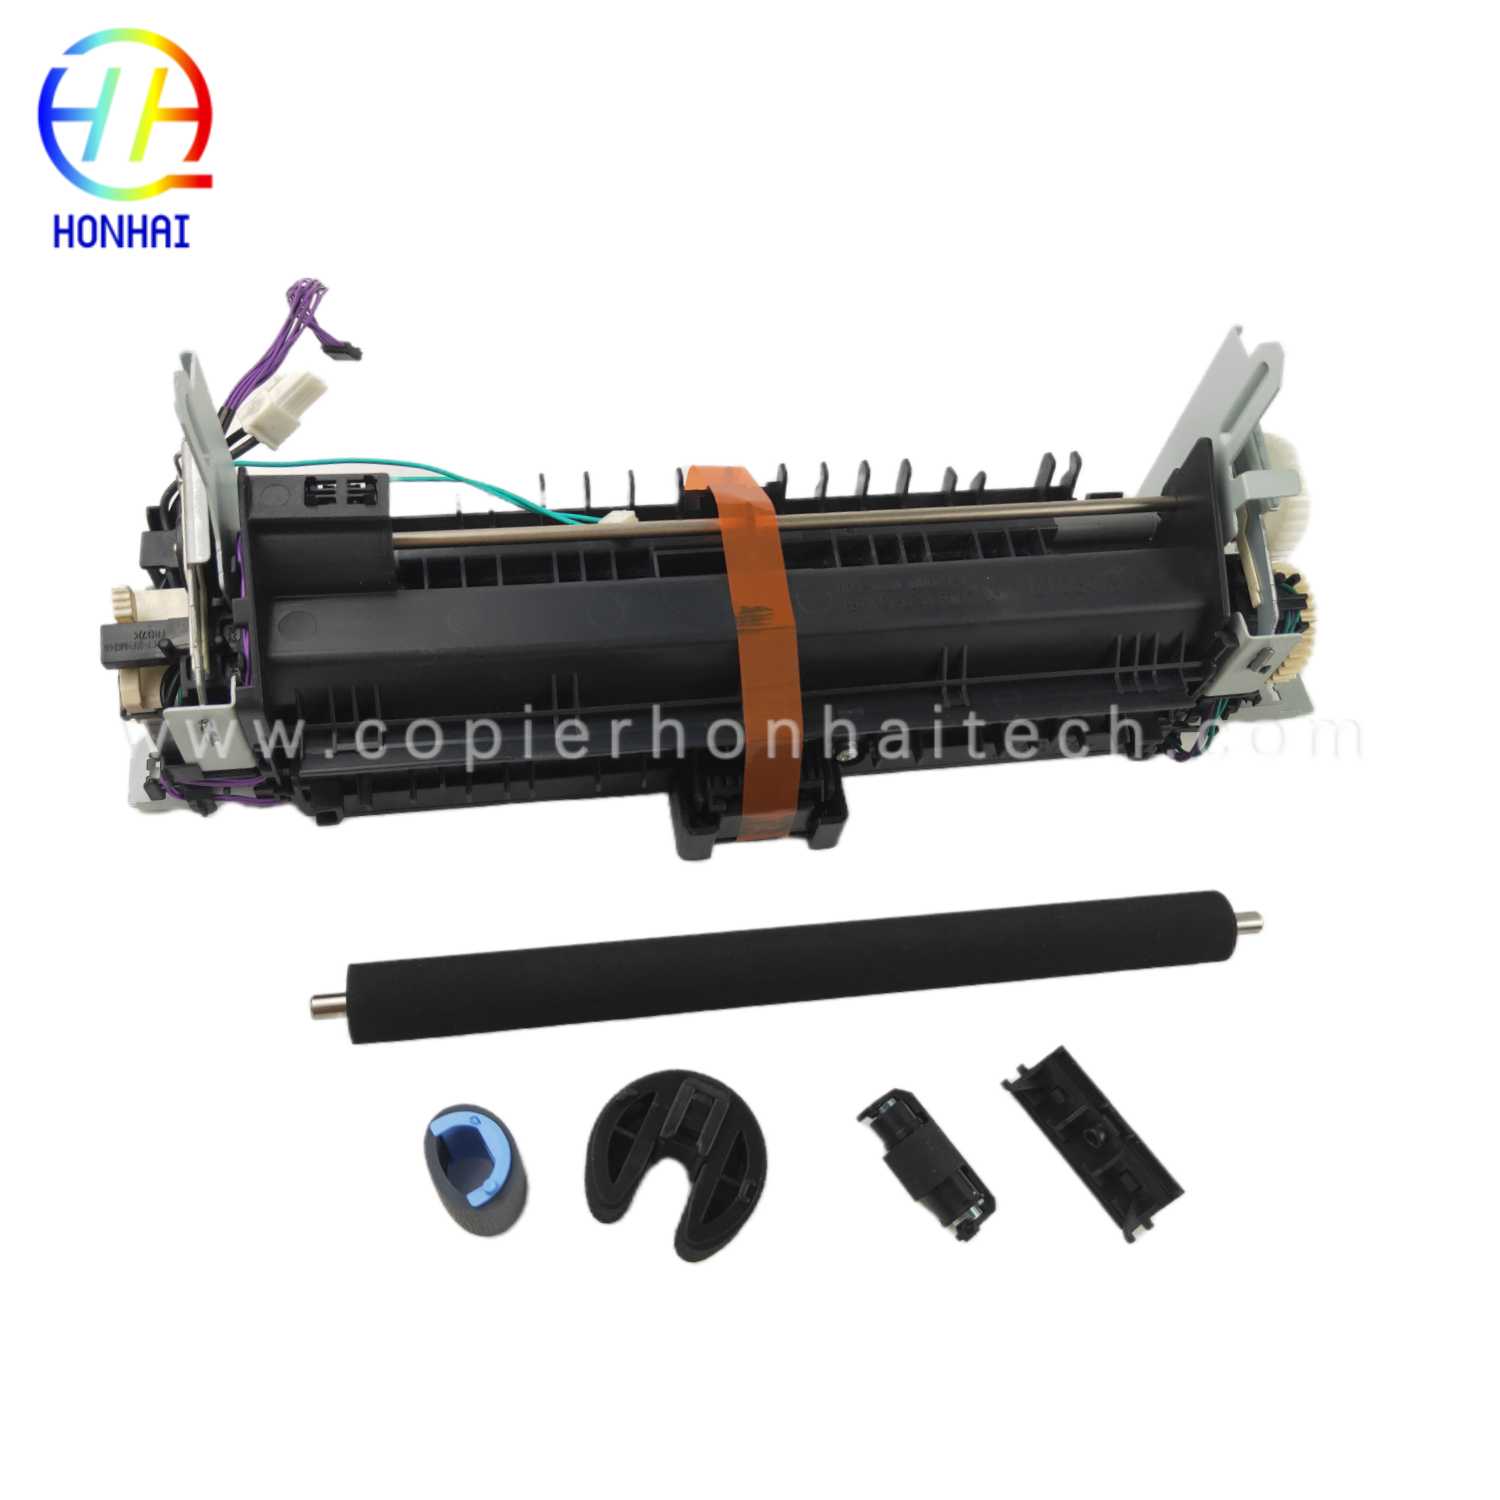 https://www.copierhonhaitech.com/origen-95-new-maintenance-kit-for-hp-laserjet-pro-400-color-mfp-m475dn-product/